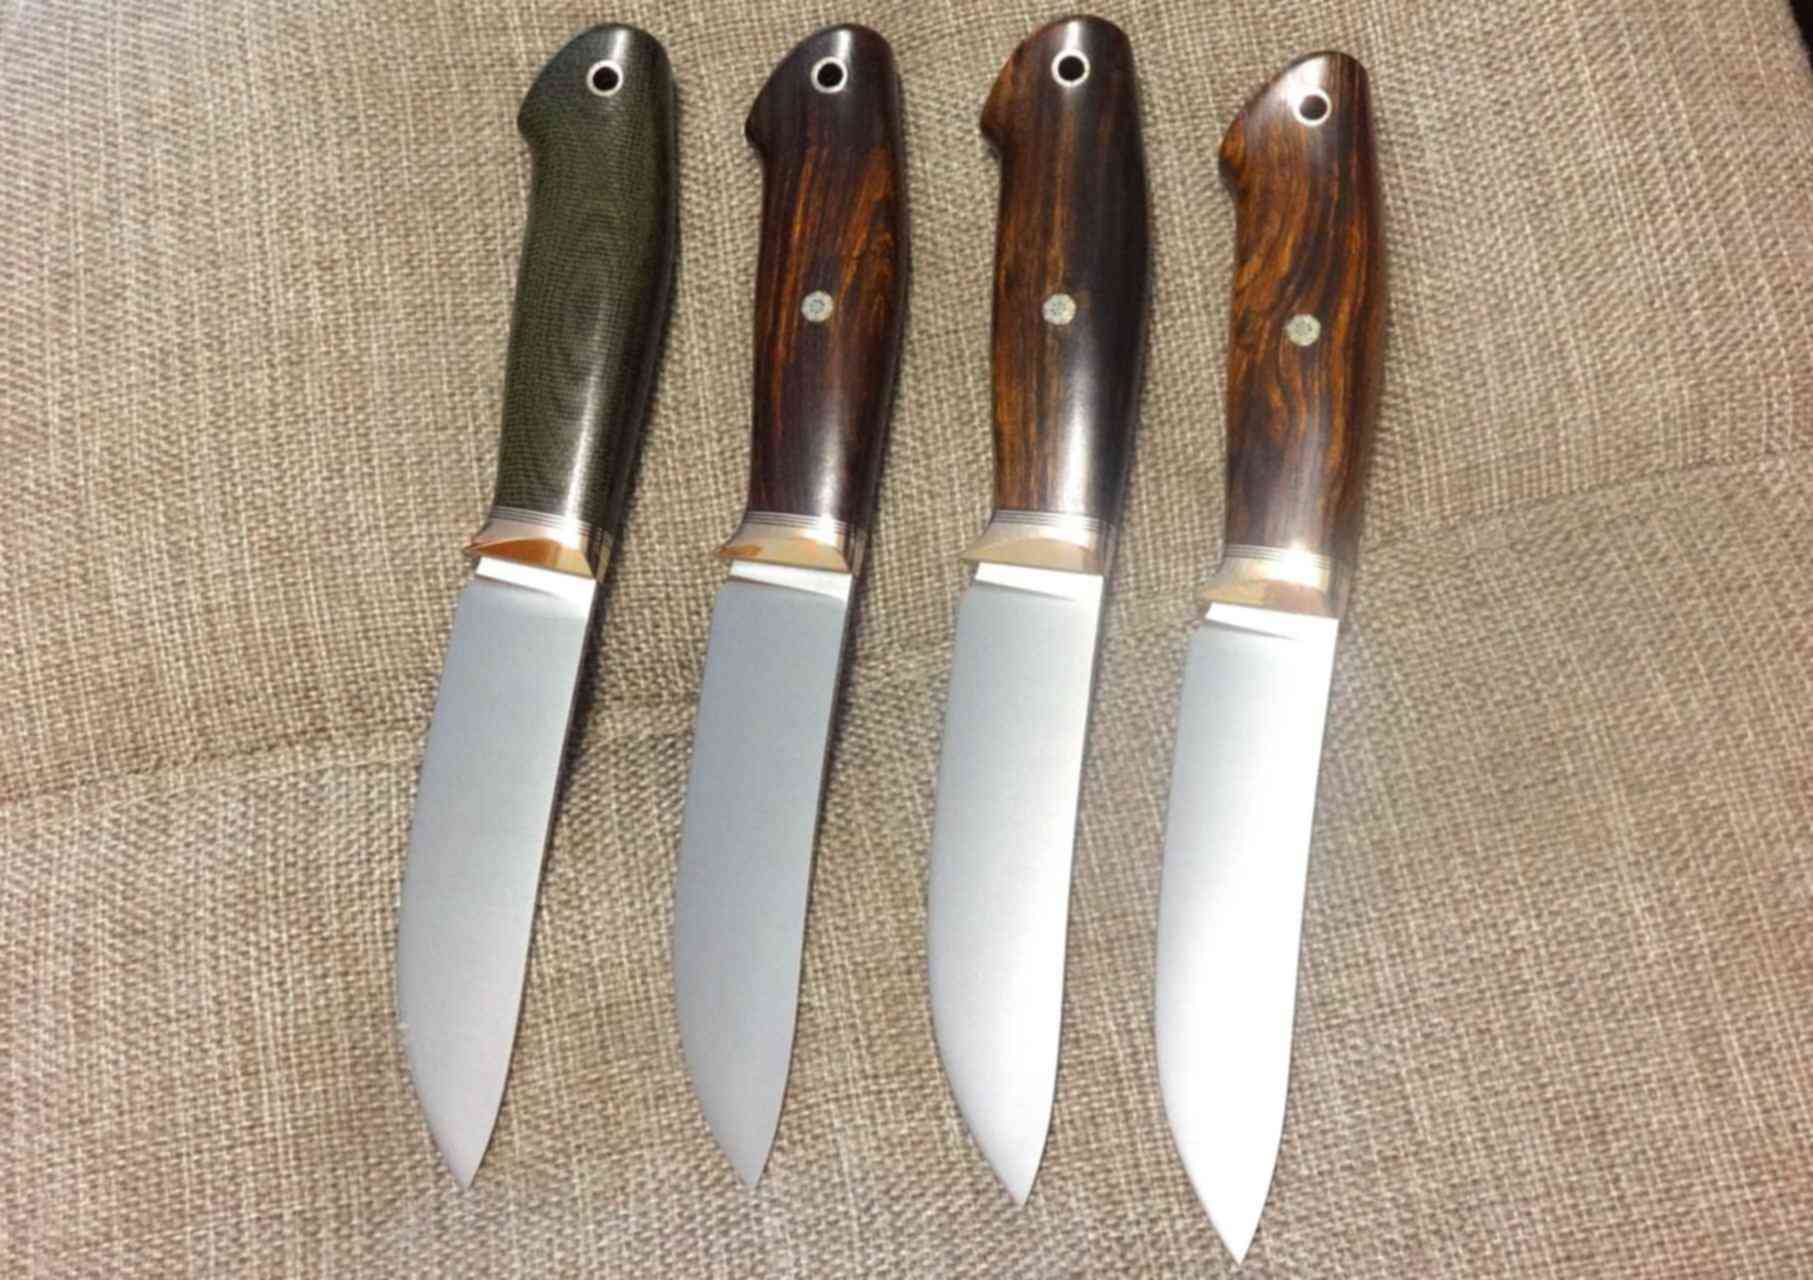 Rex 121 нож купить